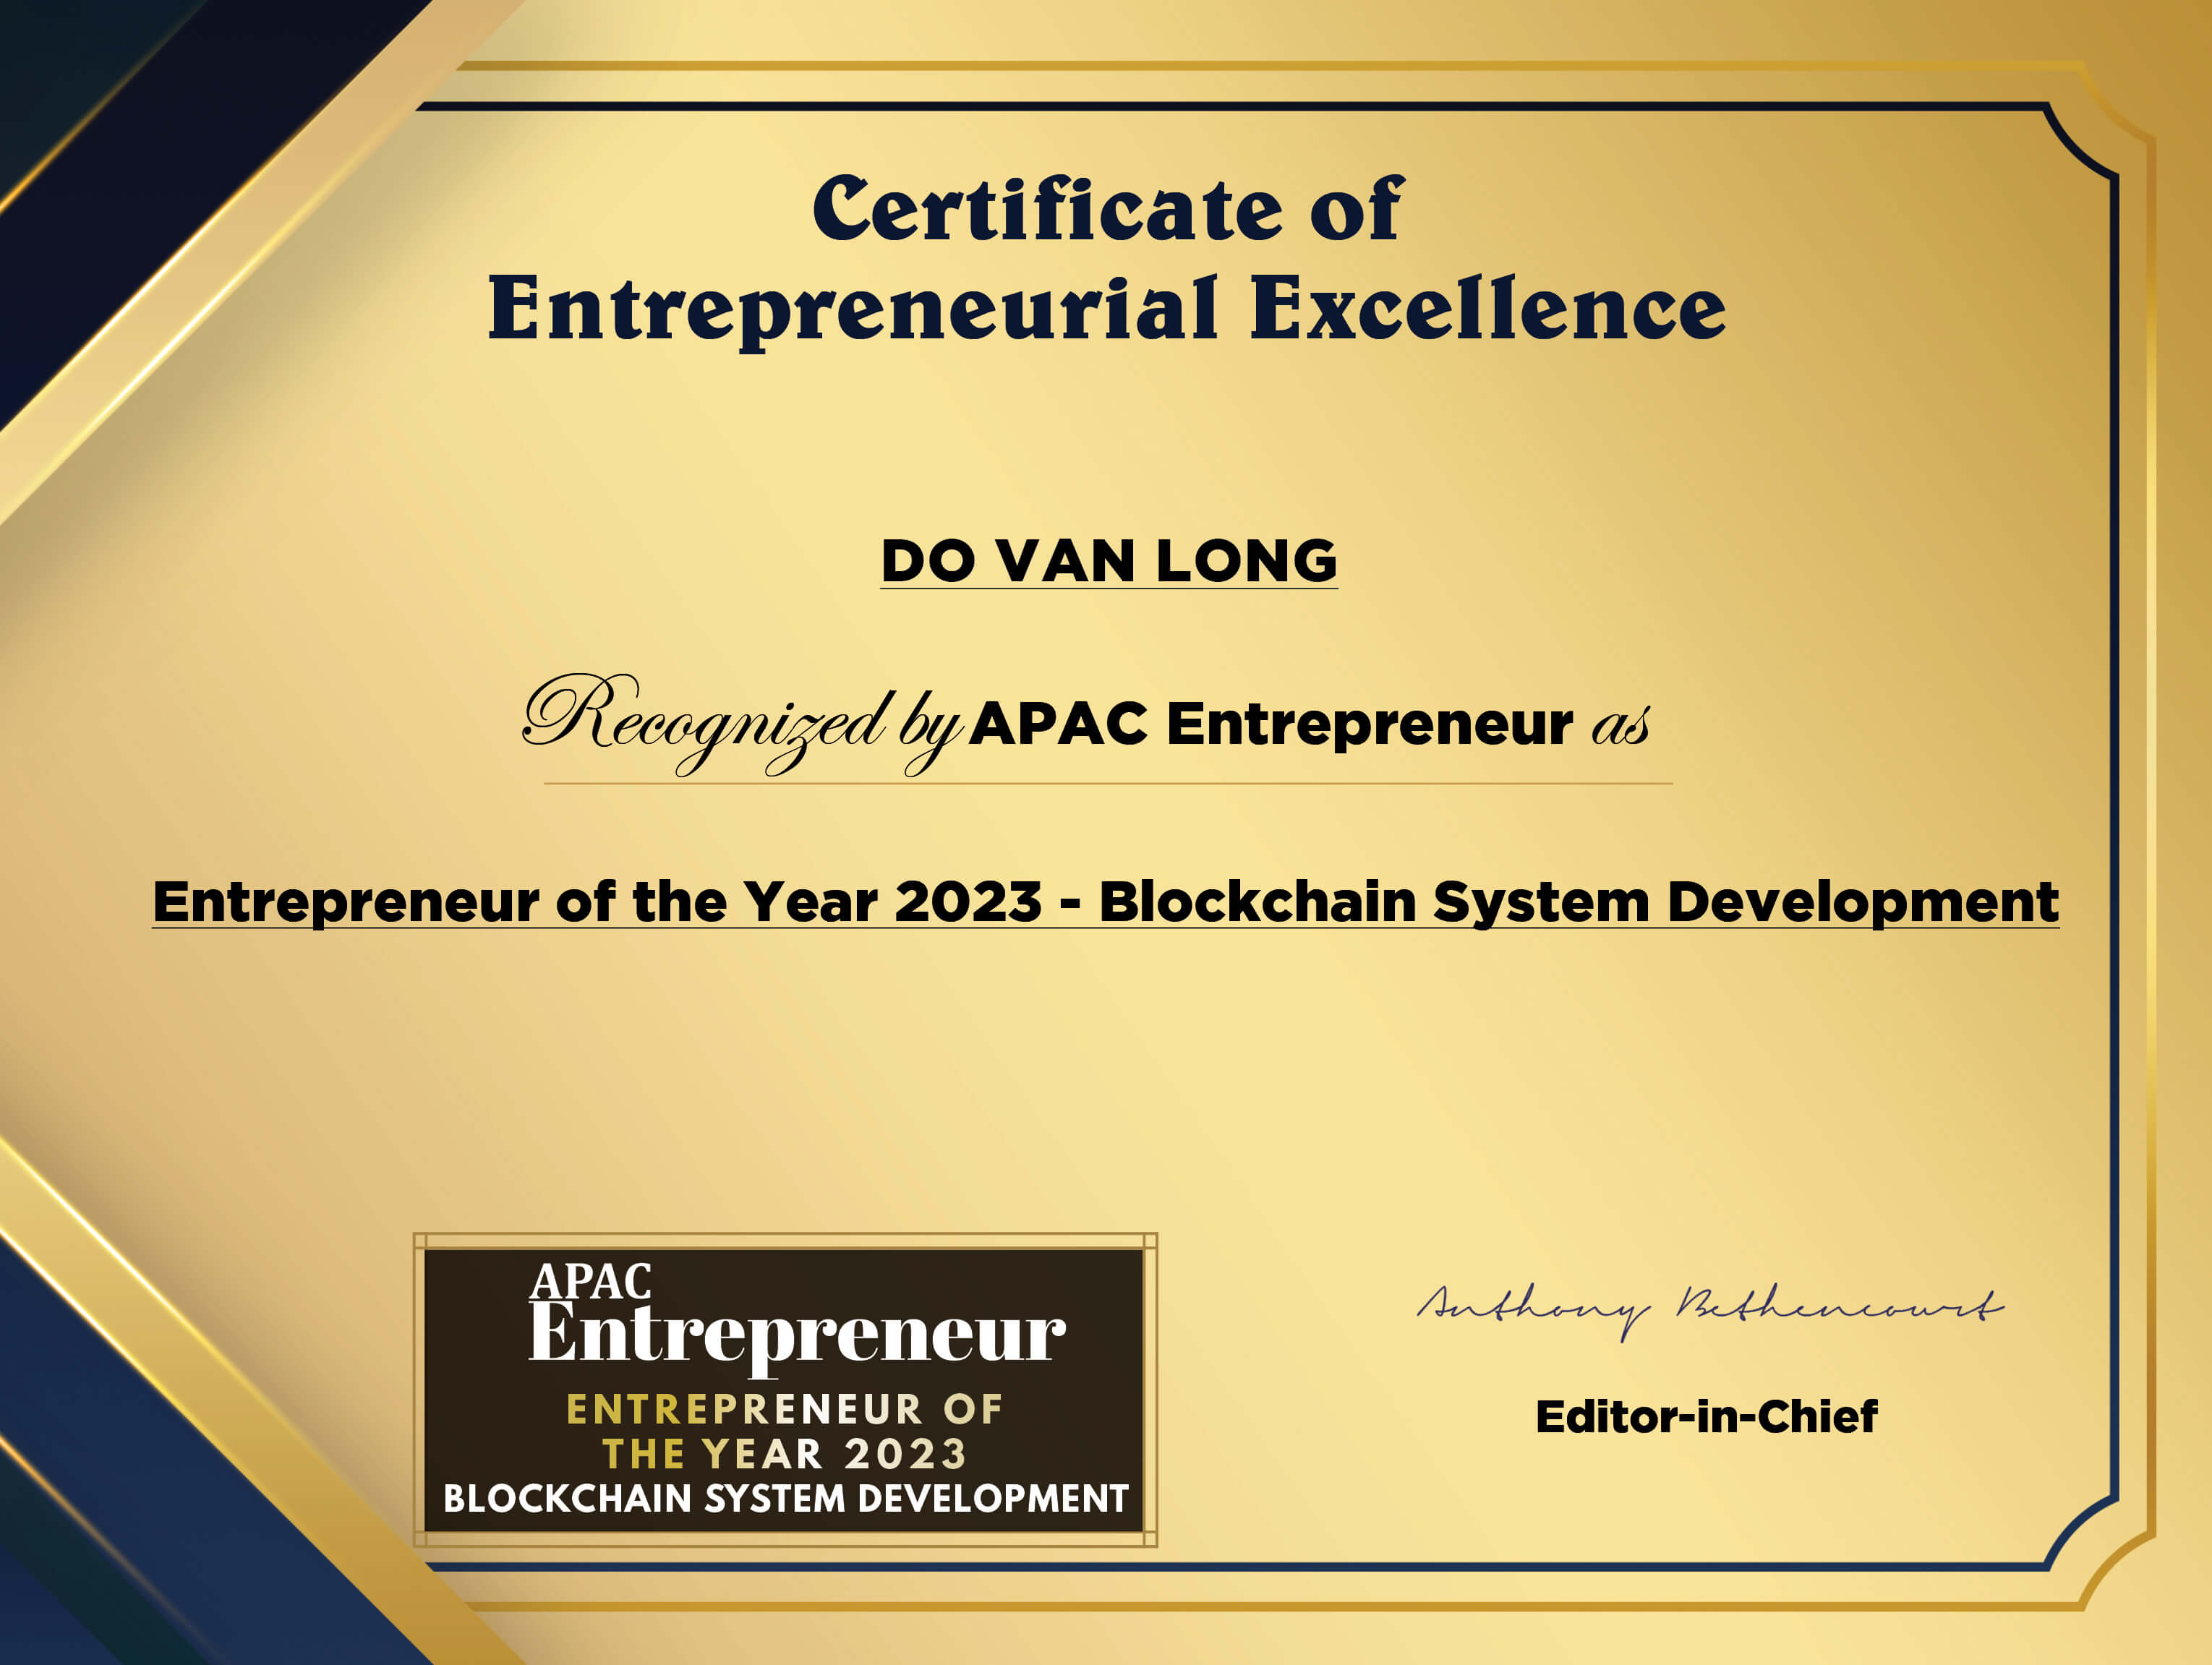 Entrepreneur of the Year 2023 - Blockchain System Development, APAC Entrepreneur